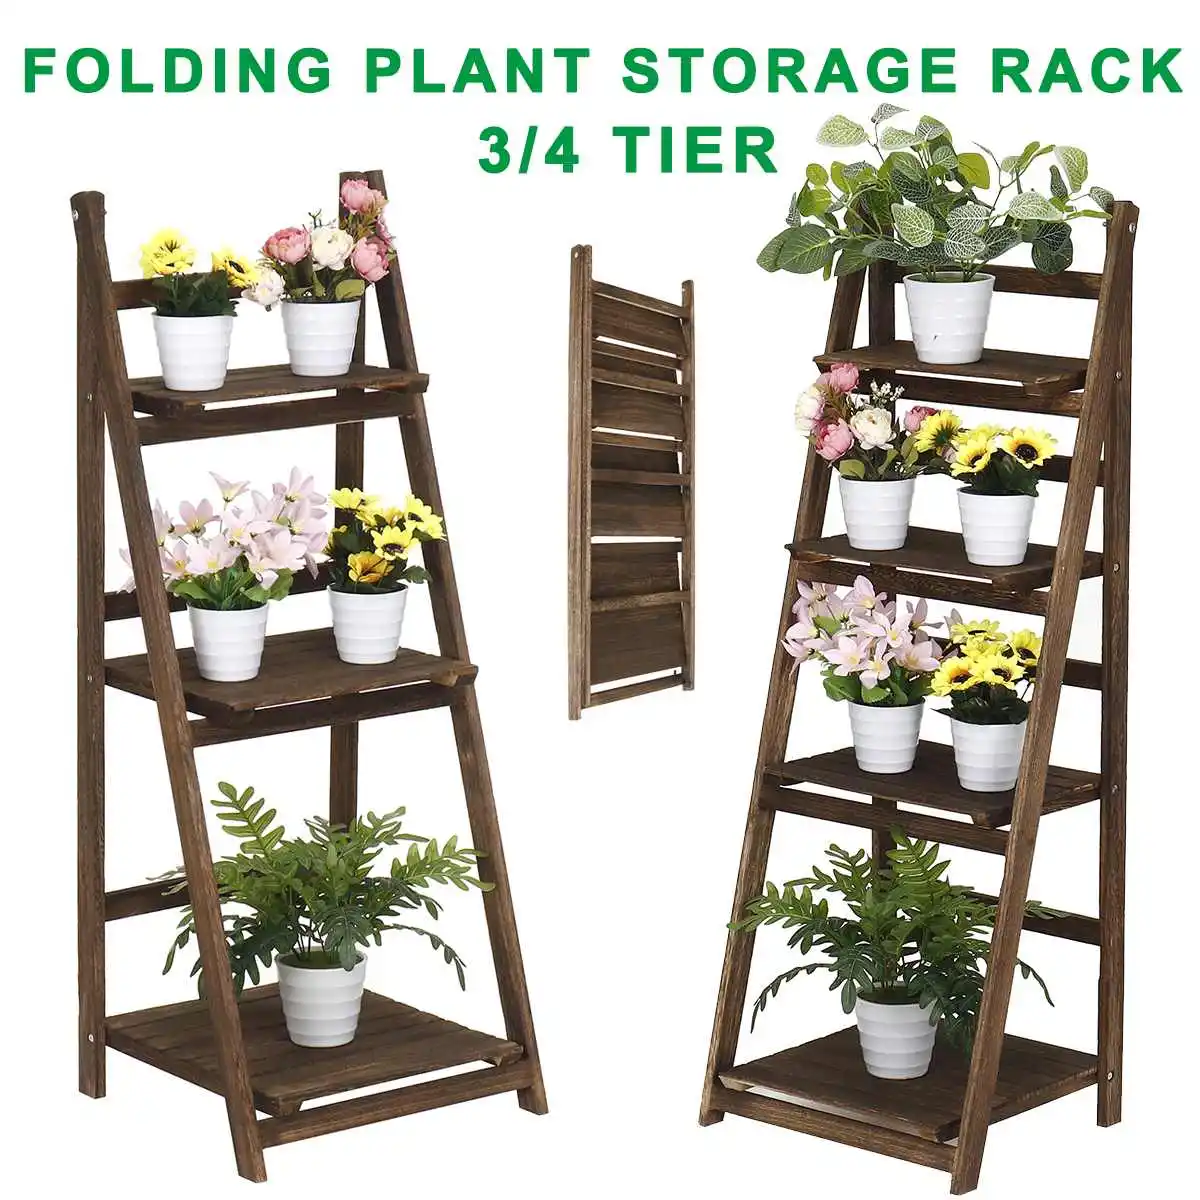 Details about   3/4 Tier Folding Ladder Shelf Plant Pot Stand Flower Storage Rack Outdoor Indoor 